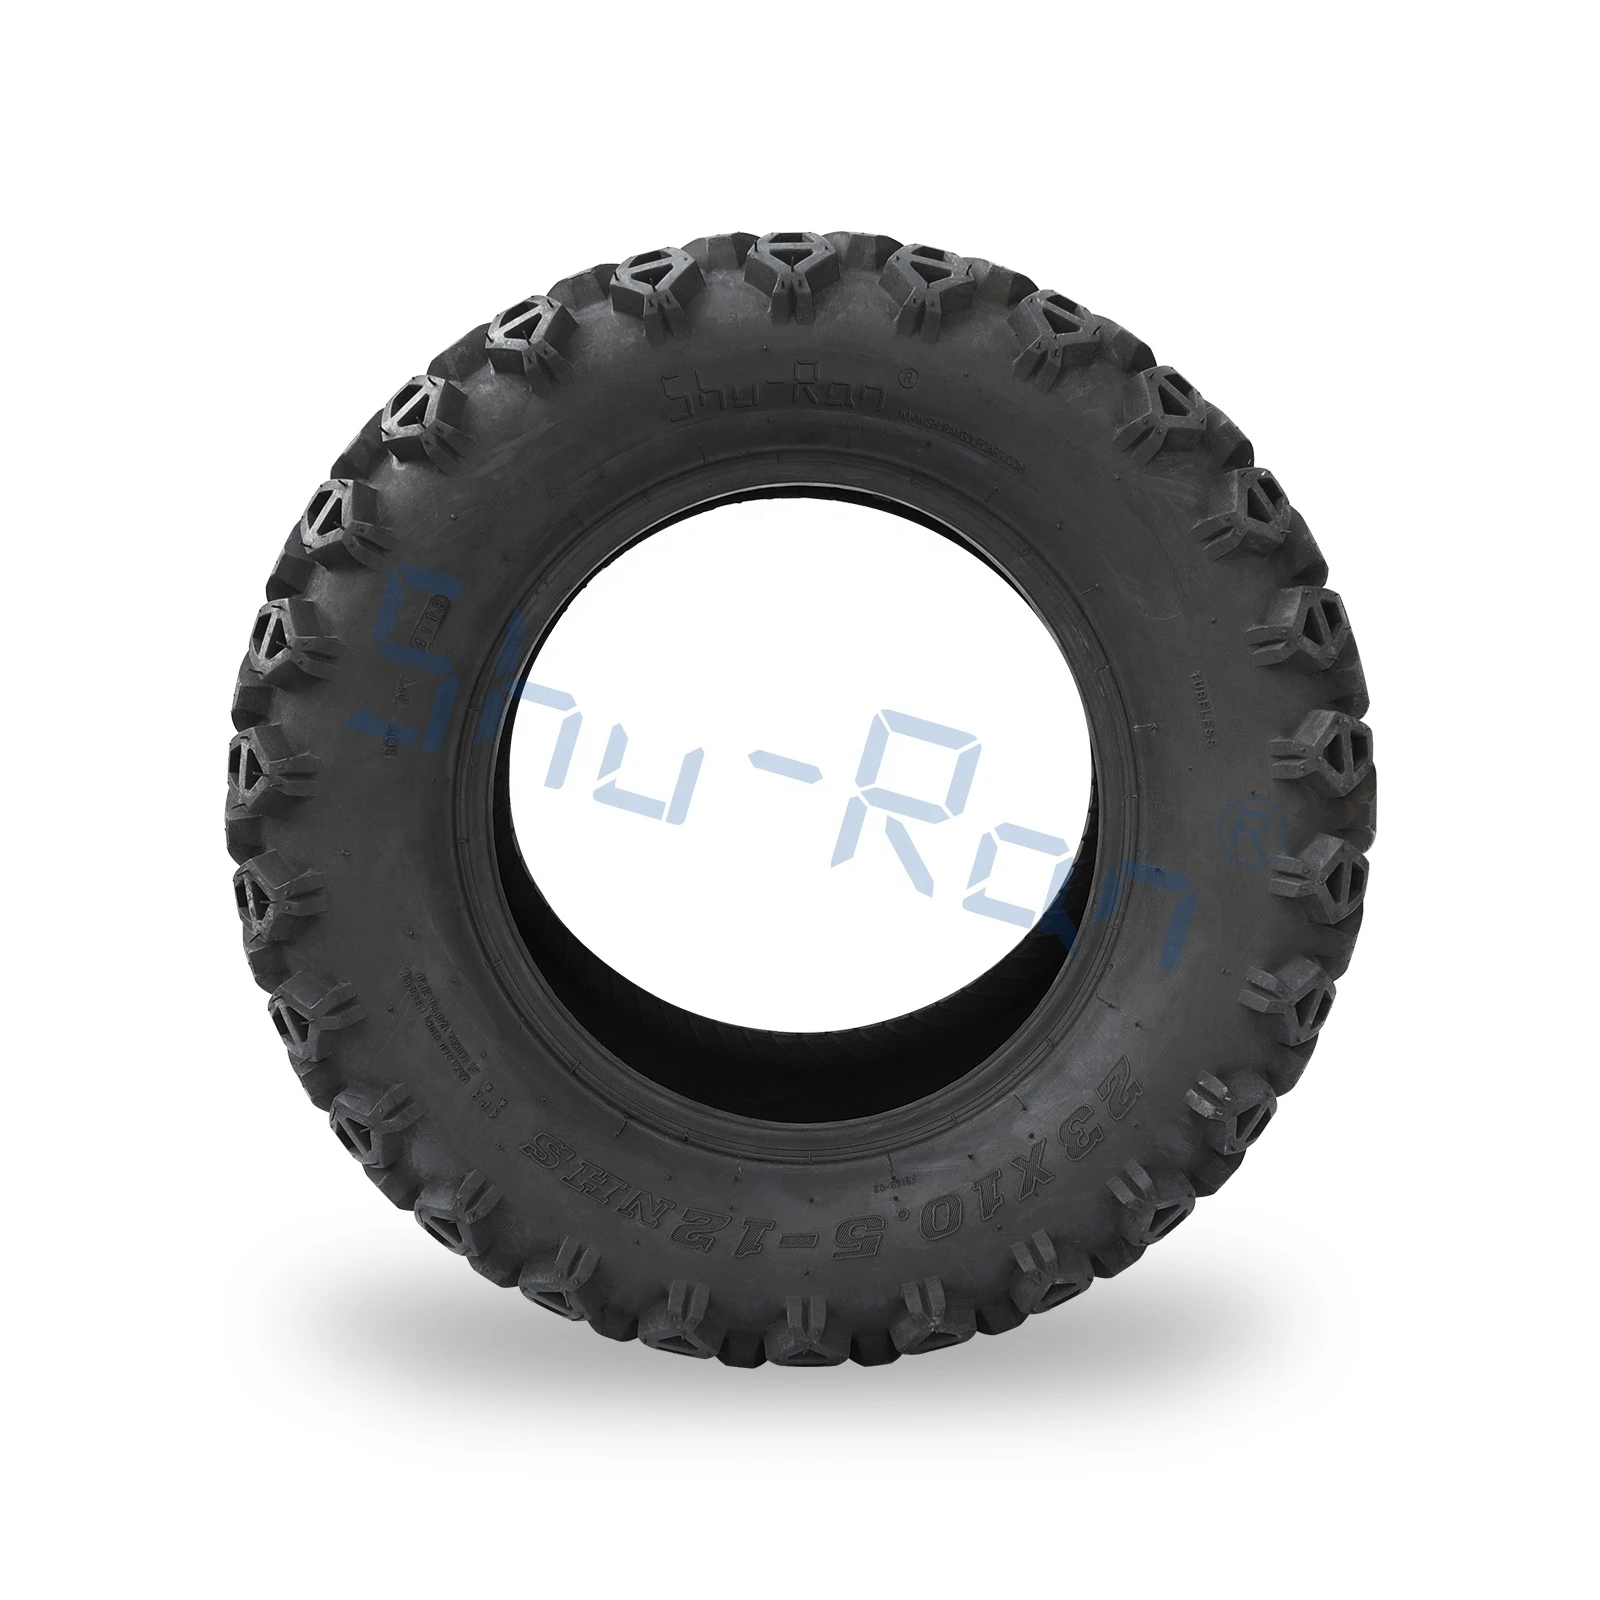 Golf Cart ATV tire 22*10-14,Gray Rubber Tubeless Tyre